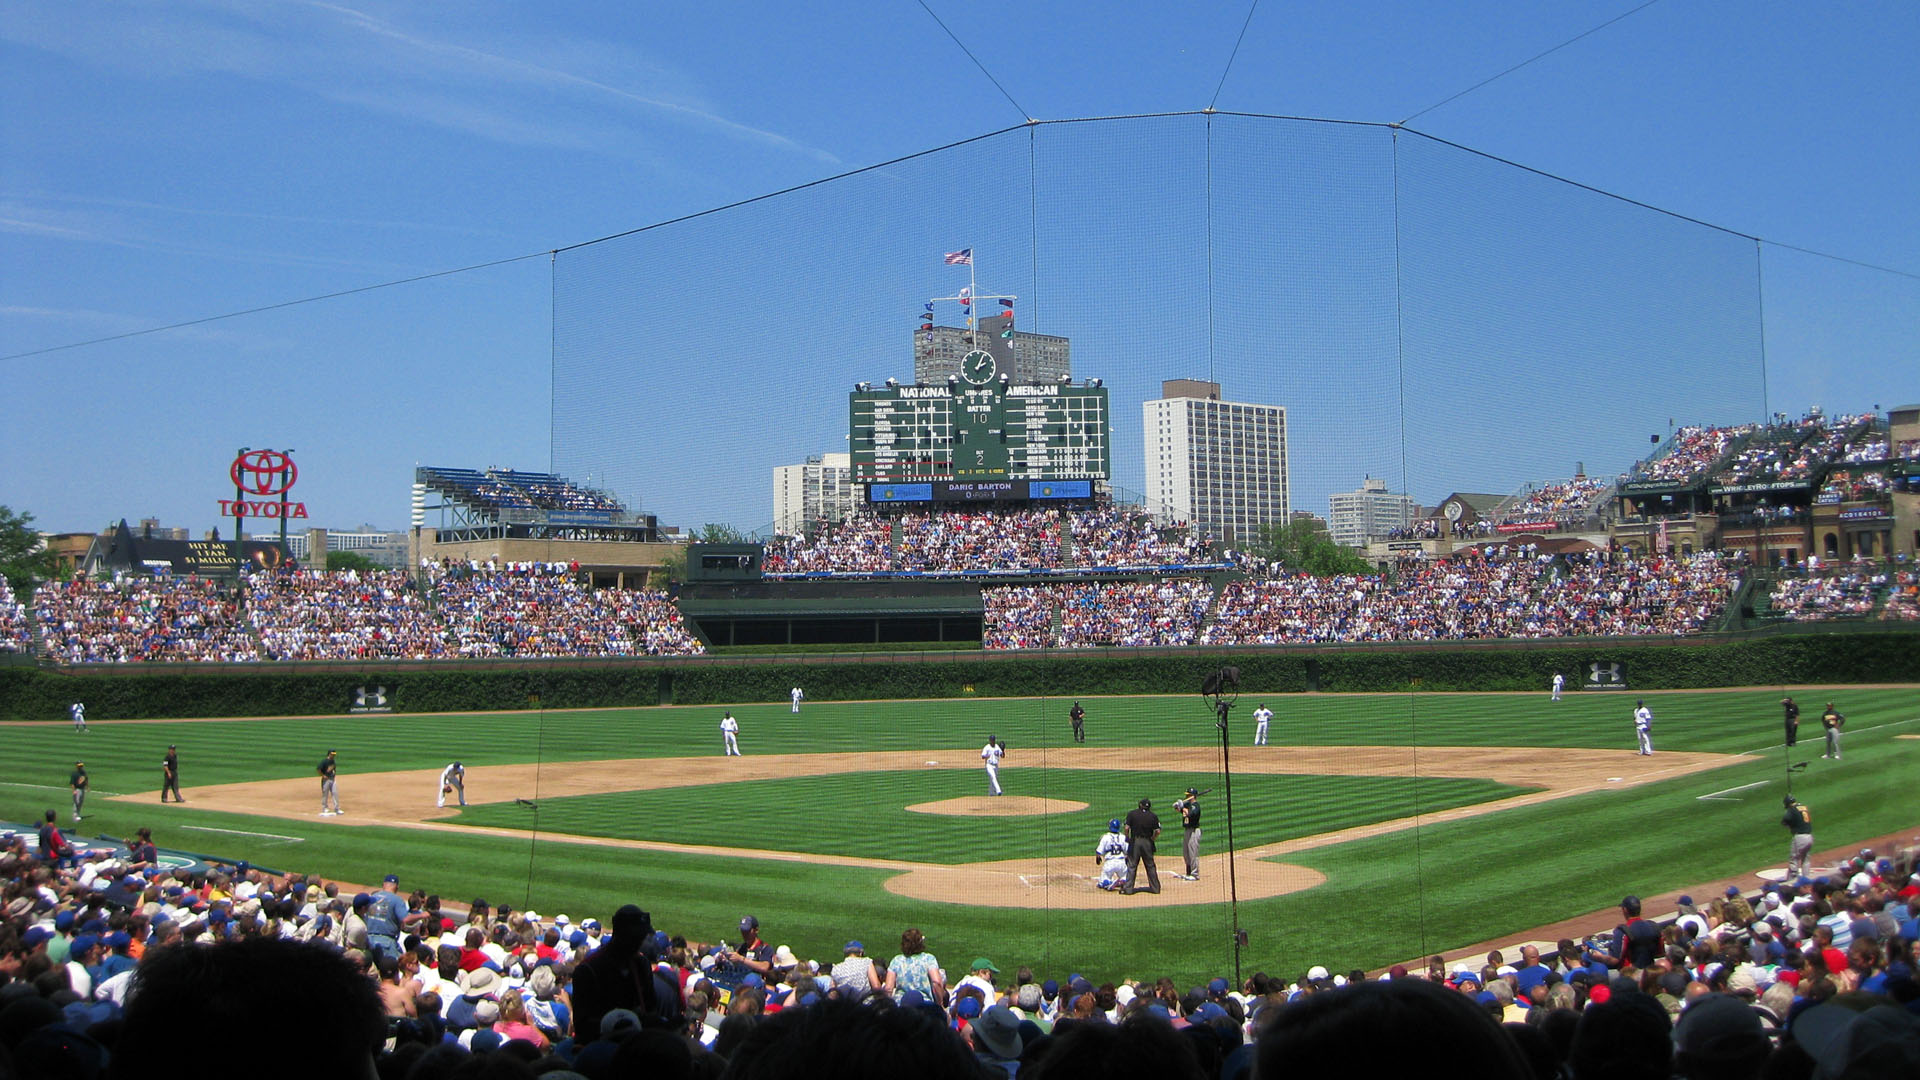 CHICAGO CUBS mlb baseball 22 wallpaper 1920x1080 232528